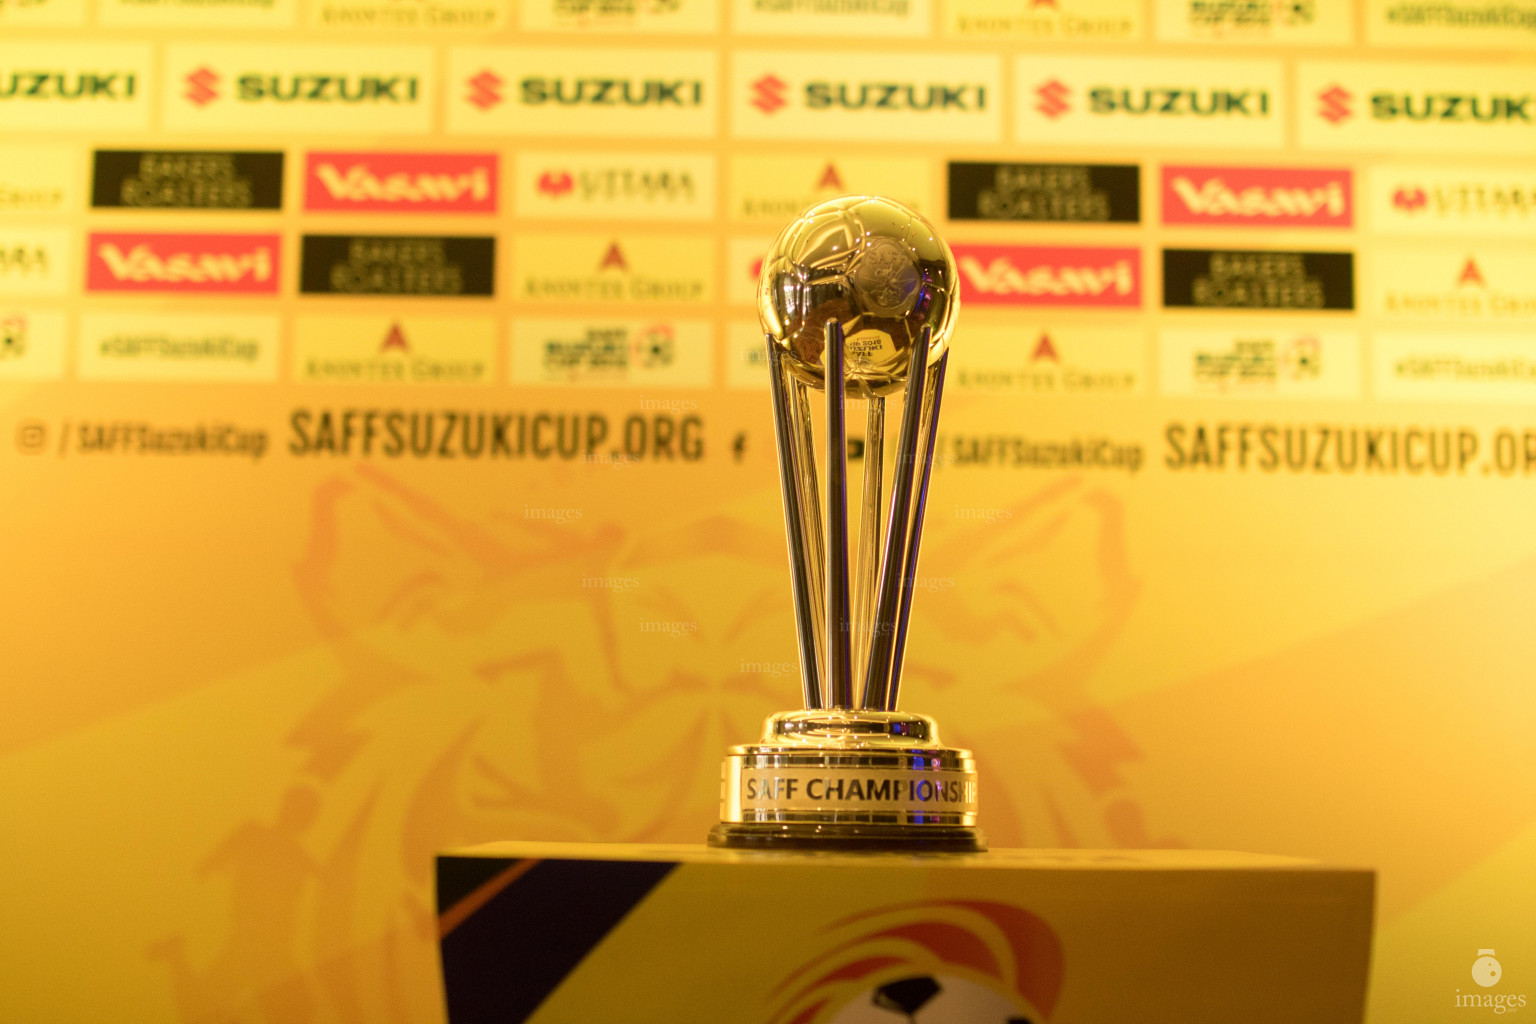 SAFF Suzuki Cup 2018 gala dinner in Dhaka, Bangladesh, Friday, September 14, 2018. (Images.mv Photo/Hussain Sinan).